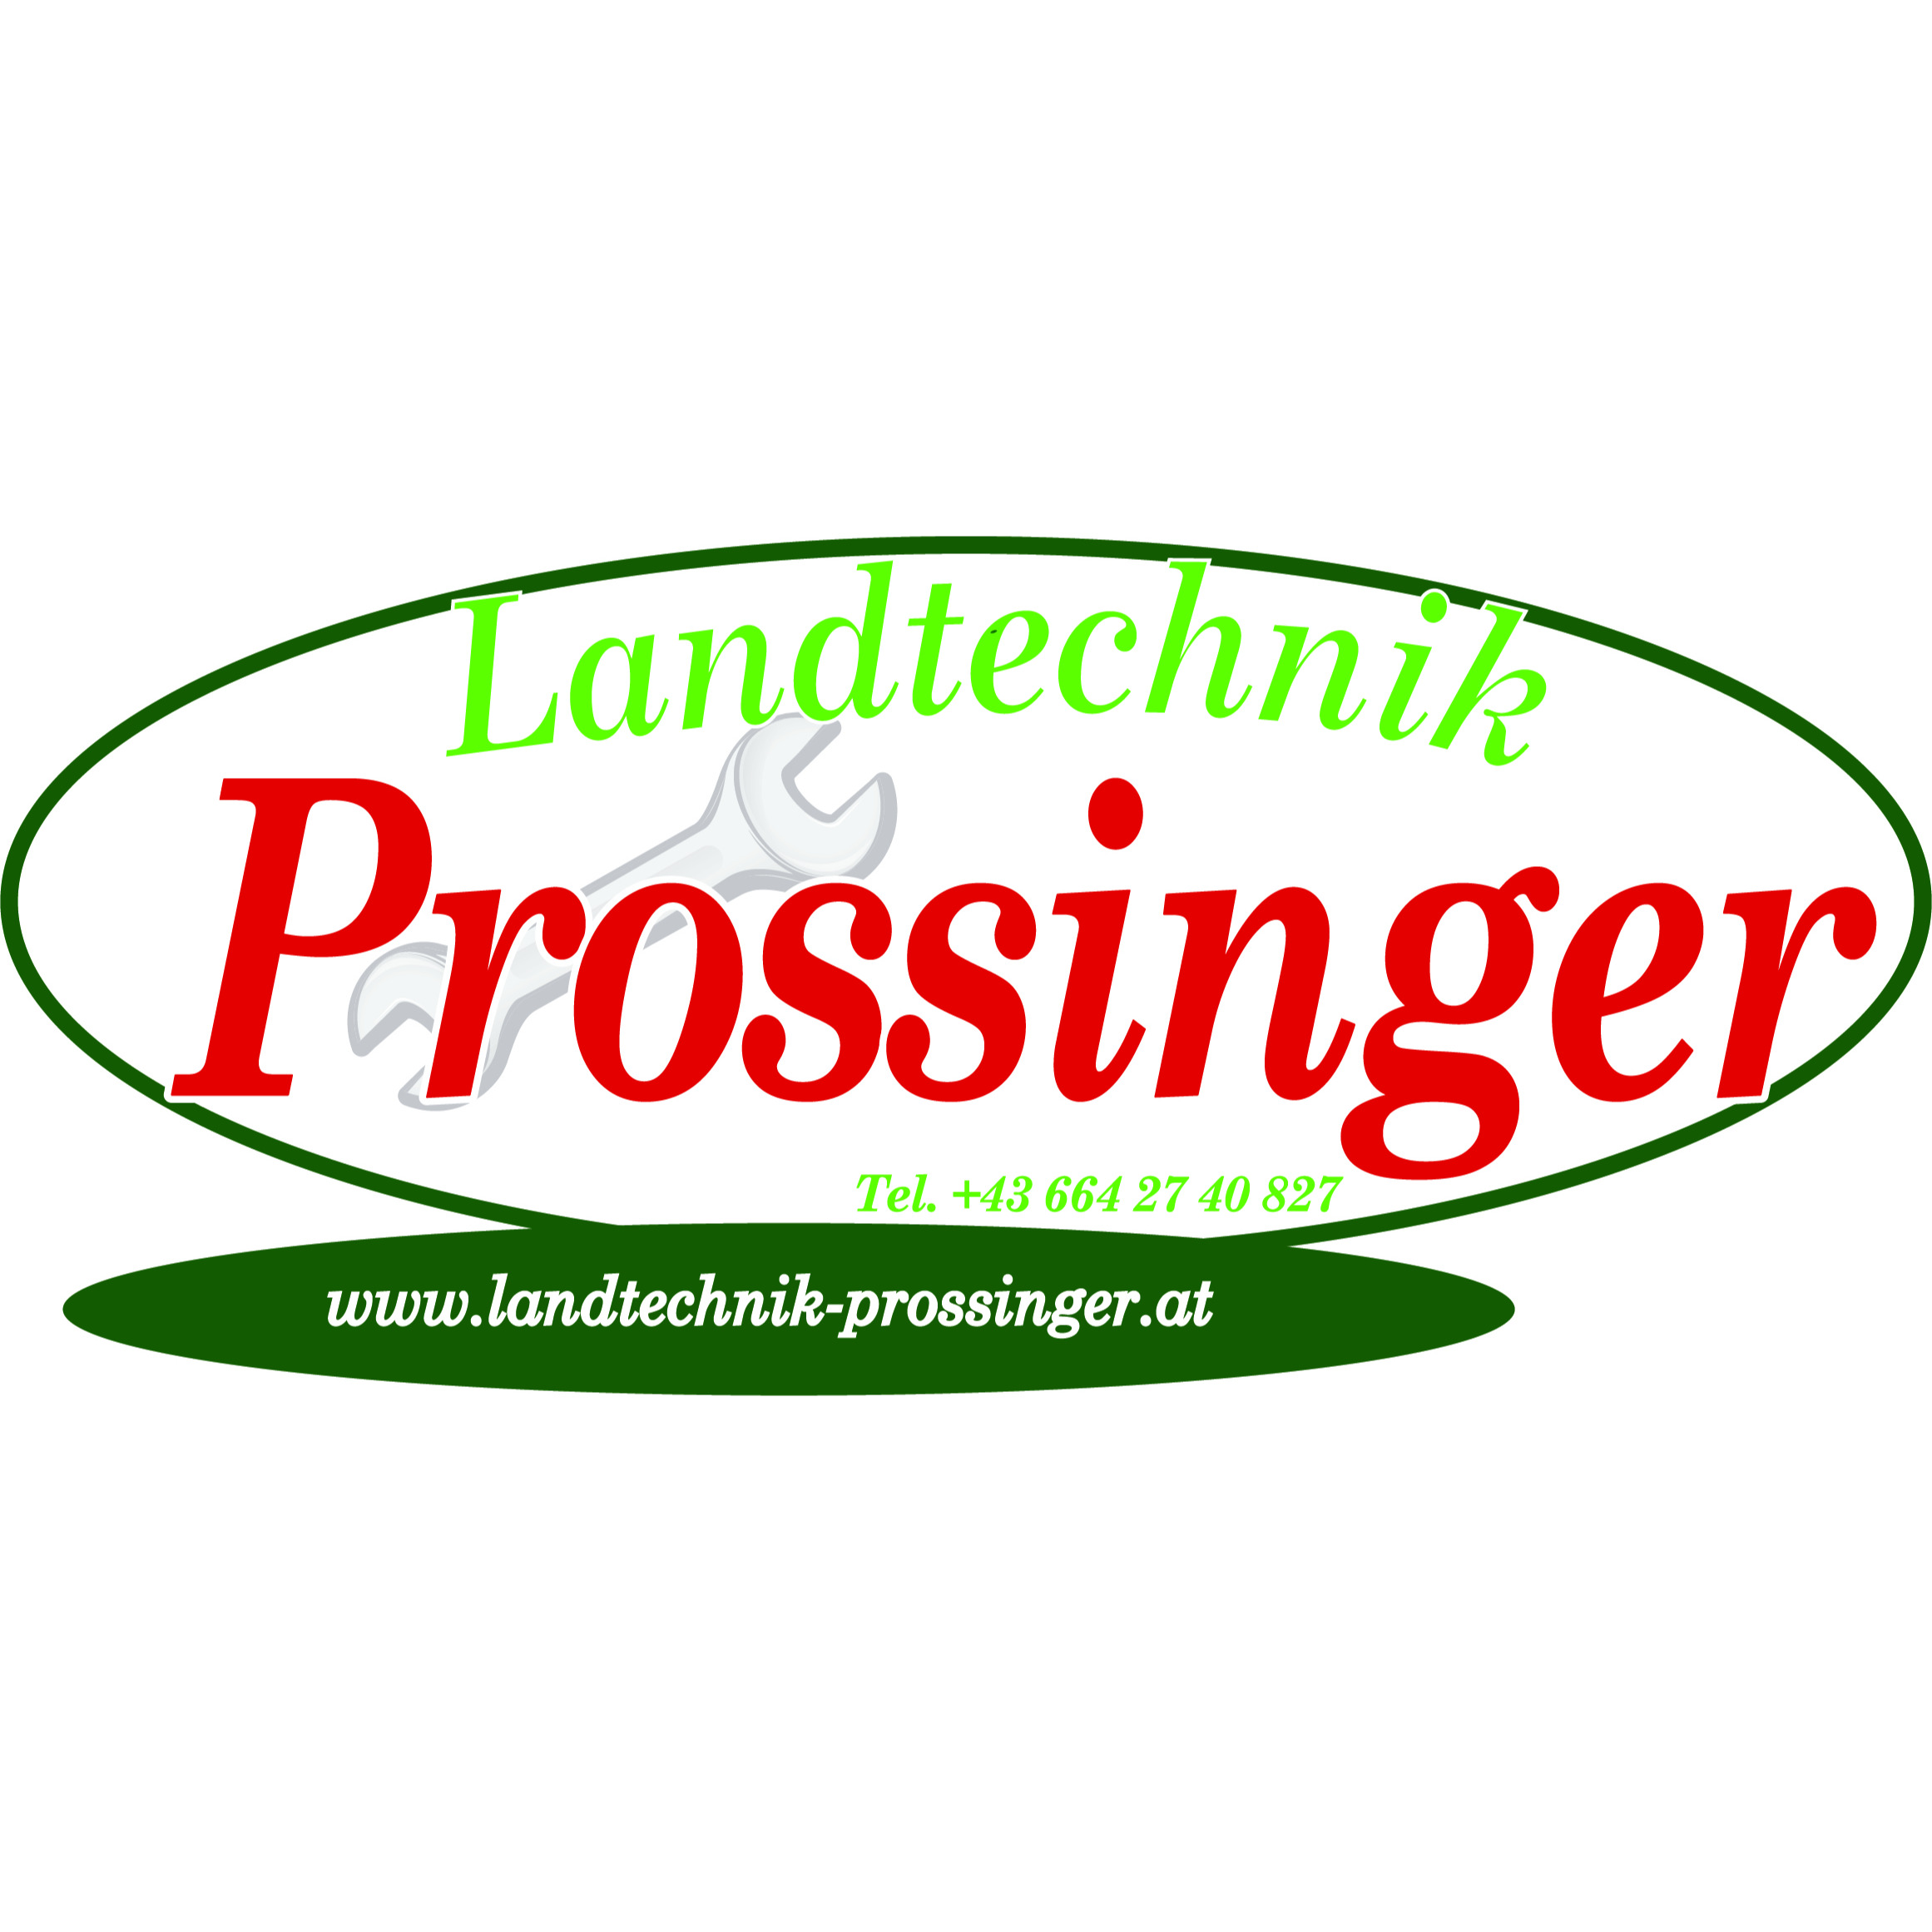 Wolfgang Prossinger Landtechnik & Reifenhandel